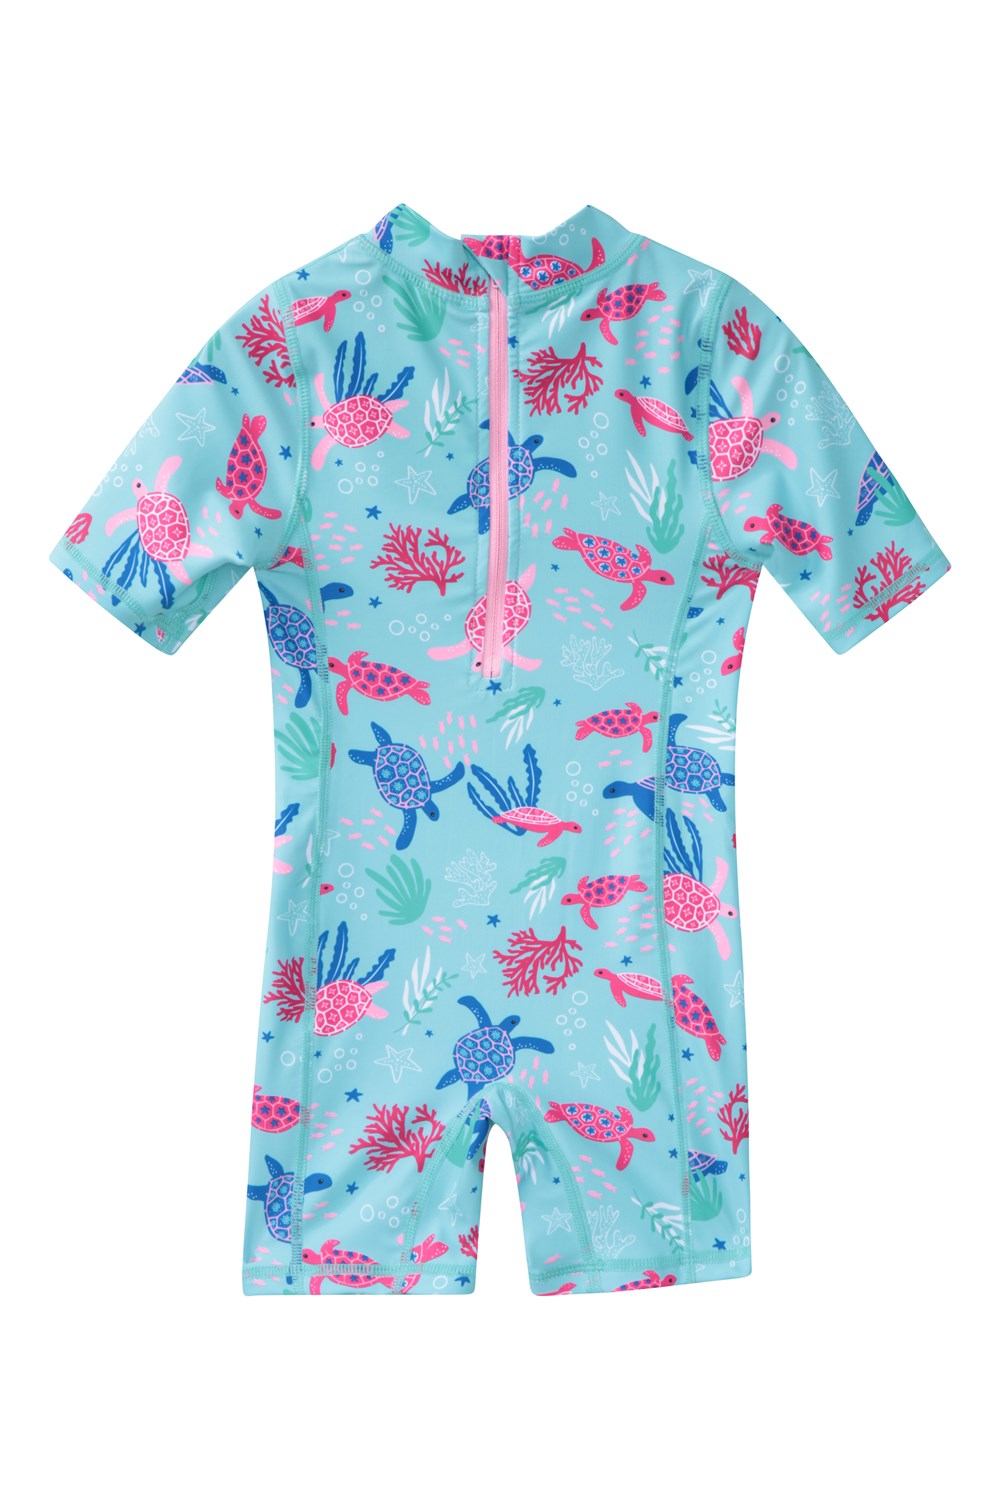 Mountain Warehouse Infant Swimsuit - UV Protect Max Kids Swimwear ...